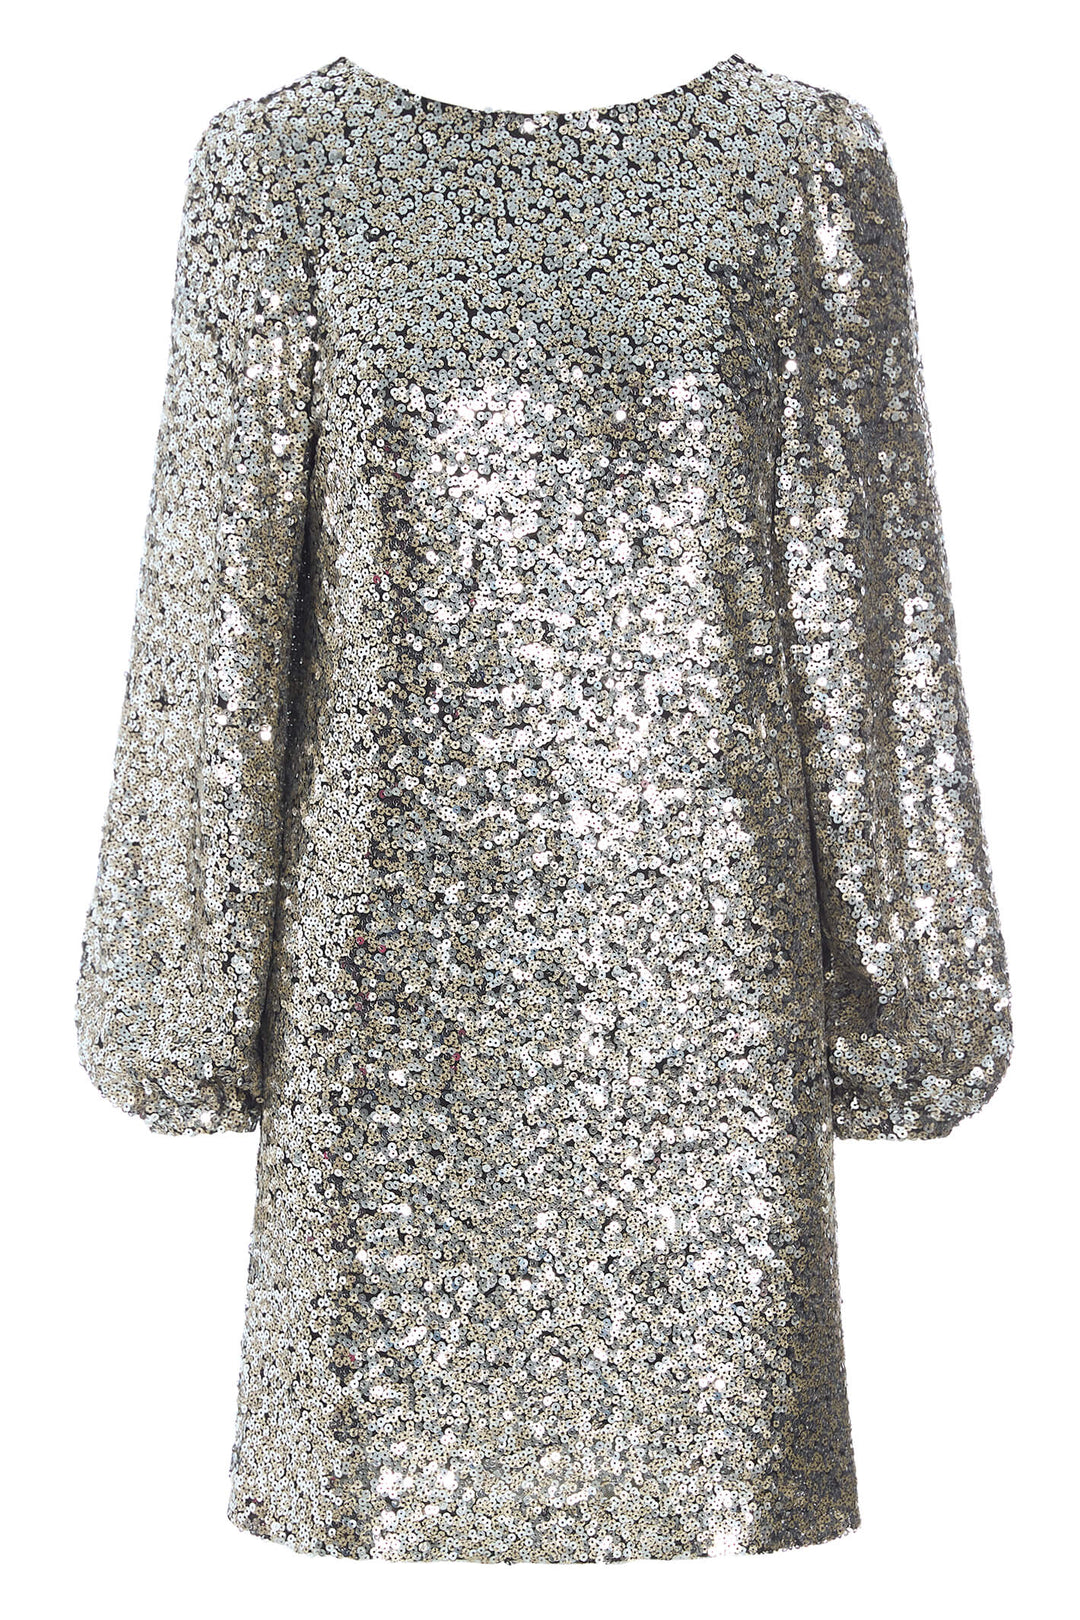 Dea Kudibal Coconiz 0131023 Platinum Short Dress With Sleeves - Olivia Grace Fashion